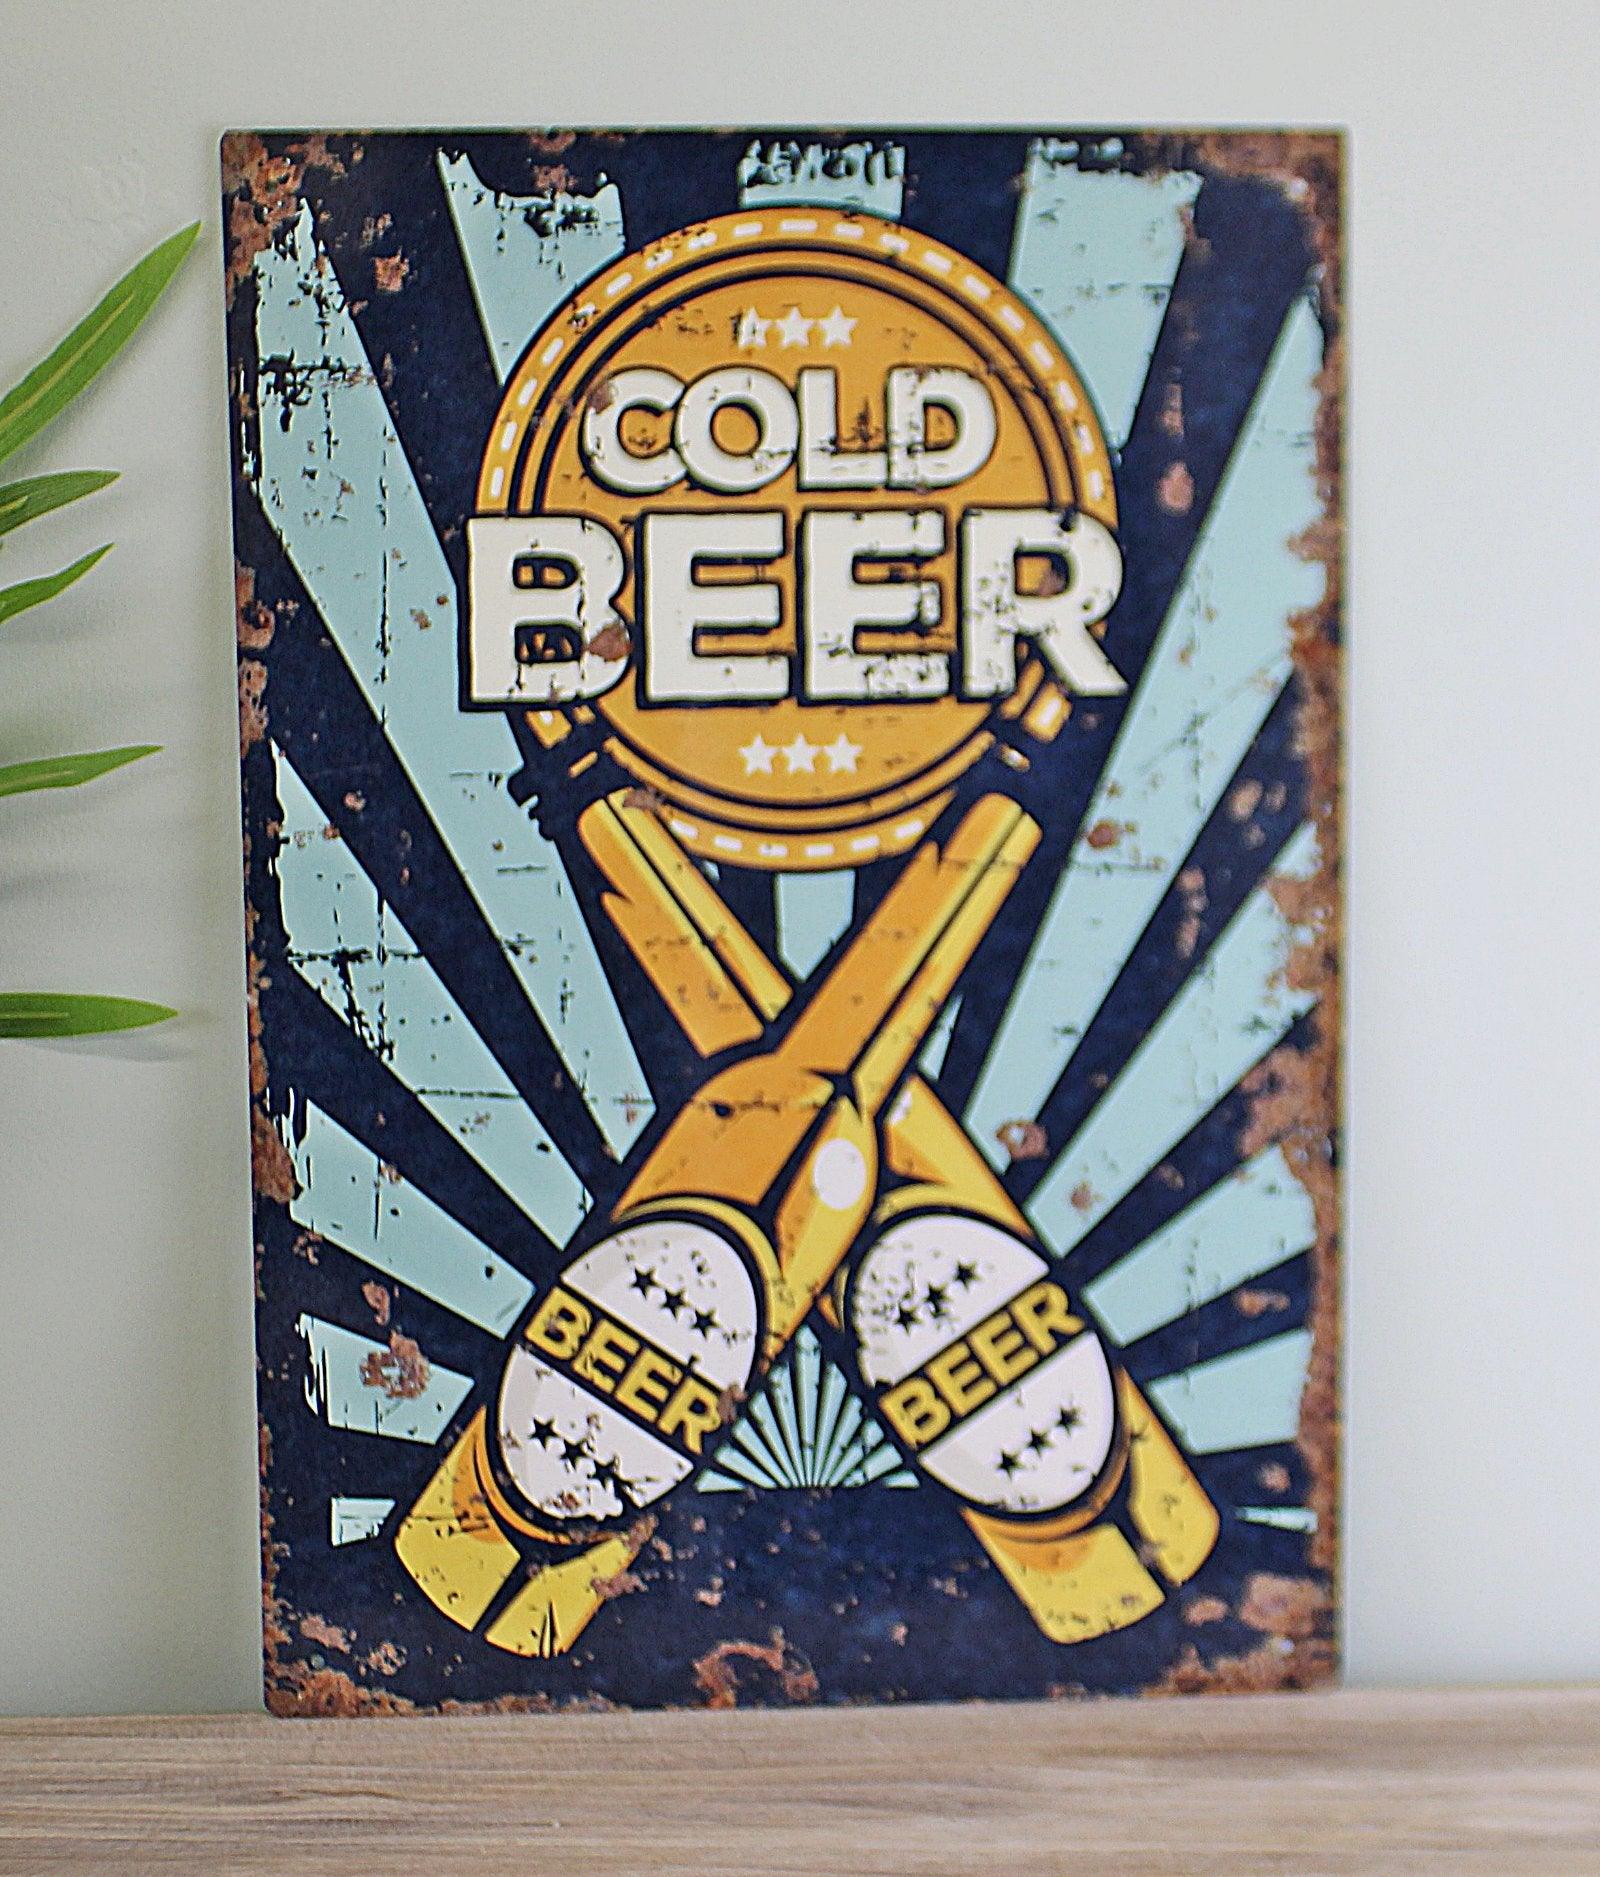 Vintage Metal Sign - Cold Beer - £27.99 - Metal Sign 